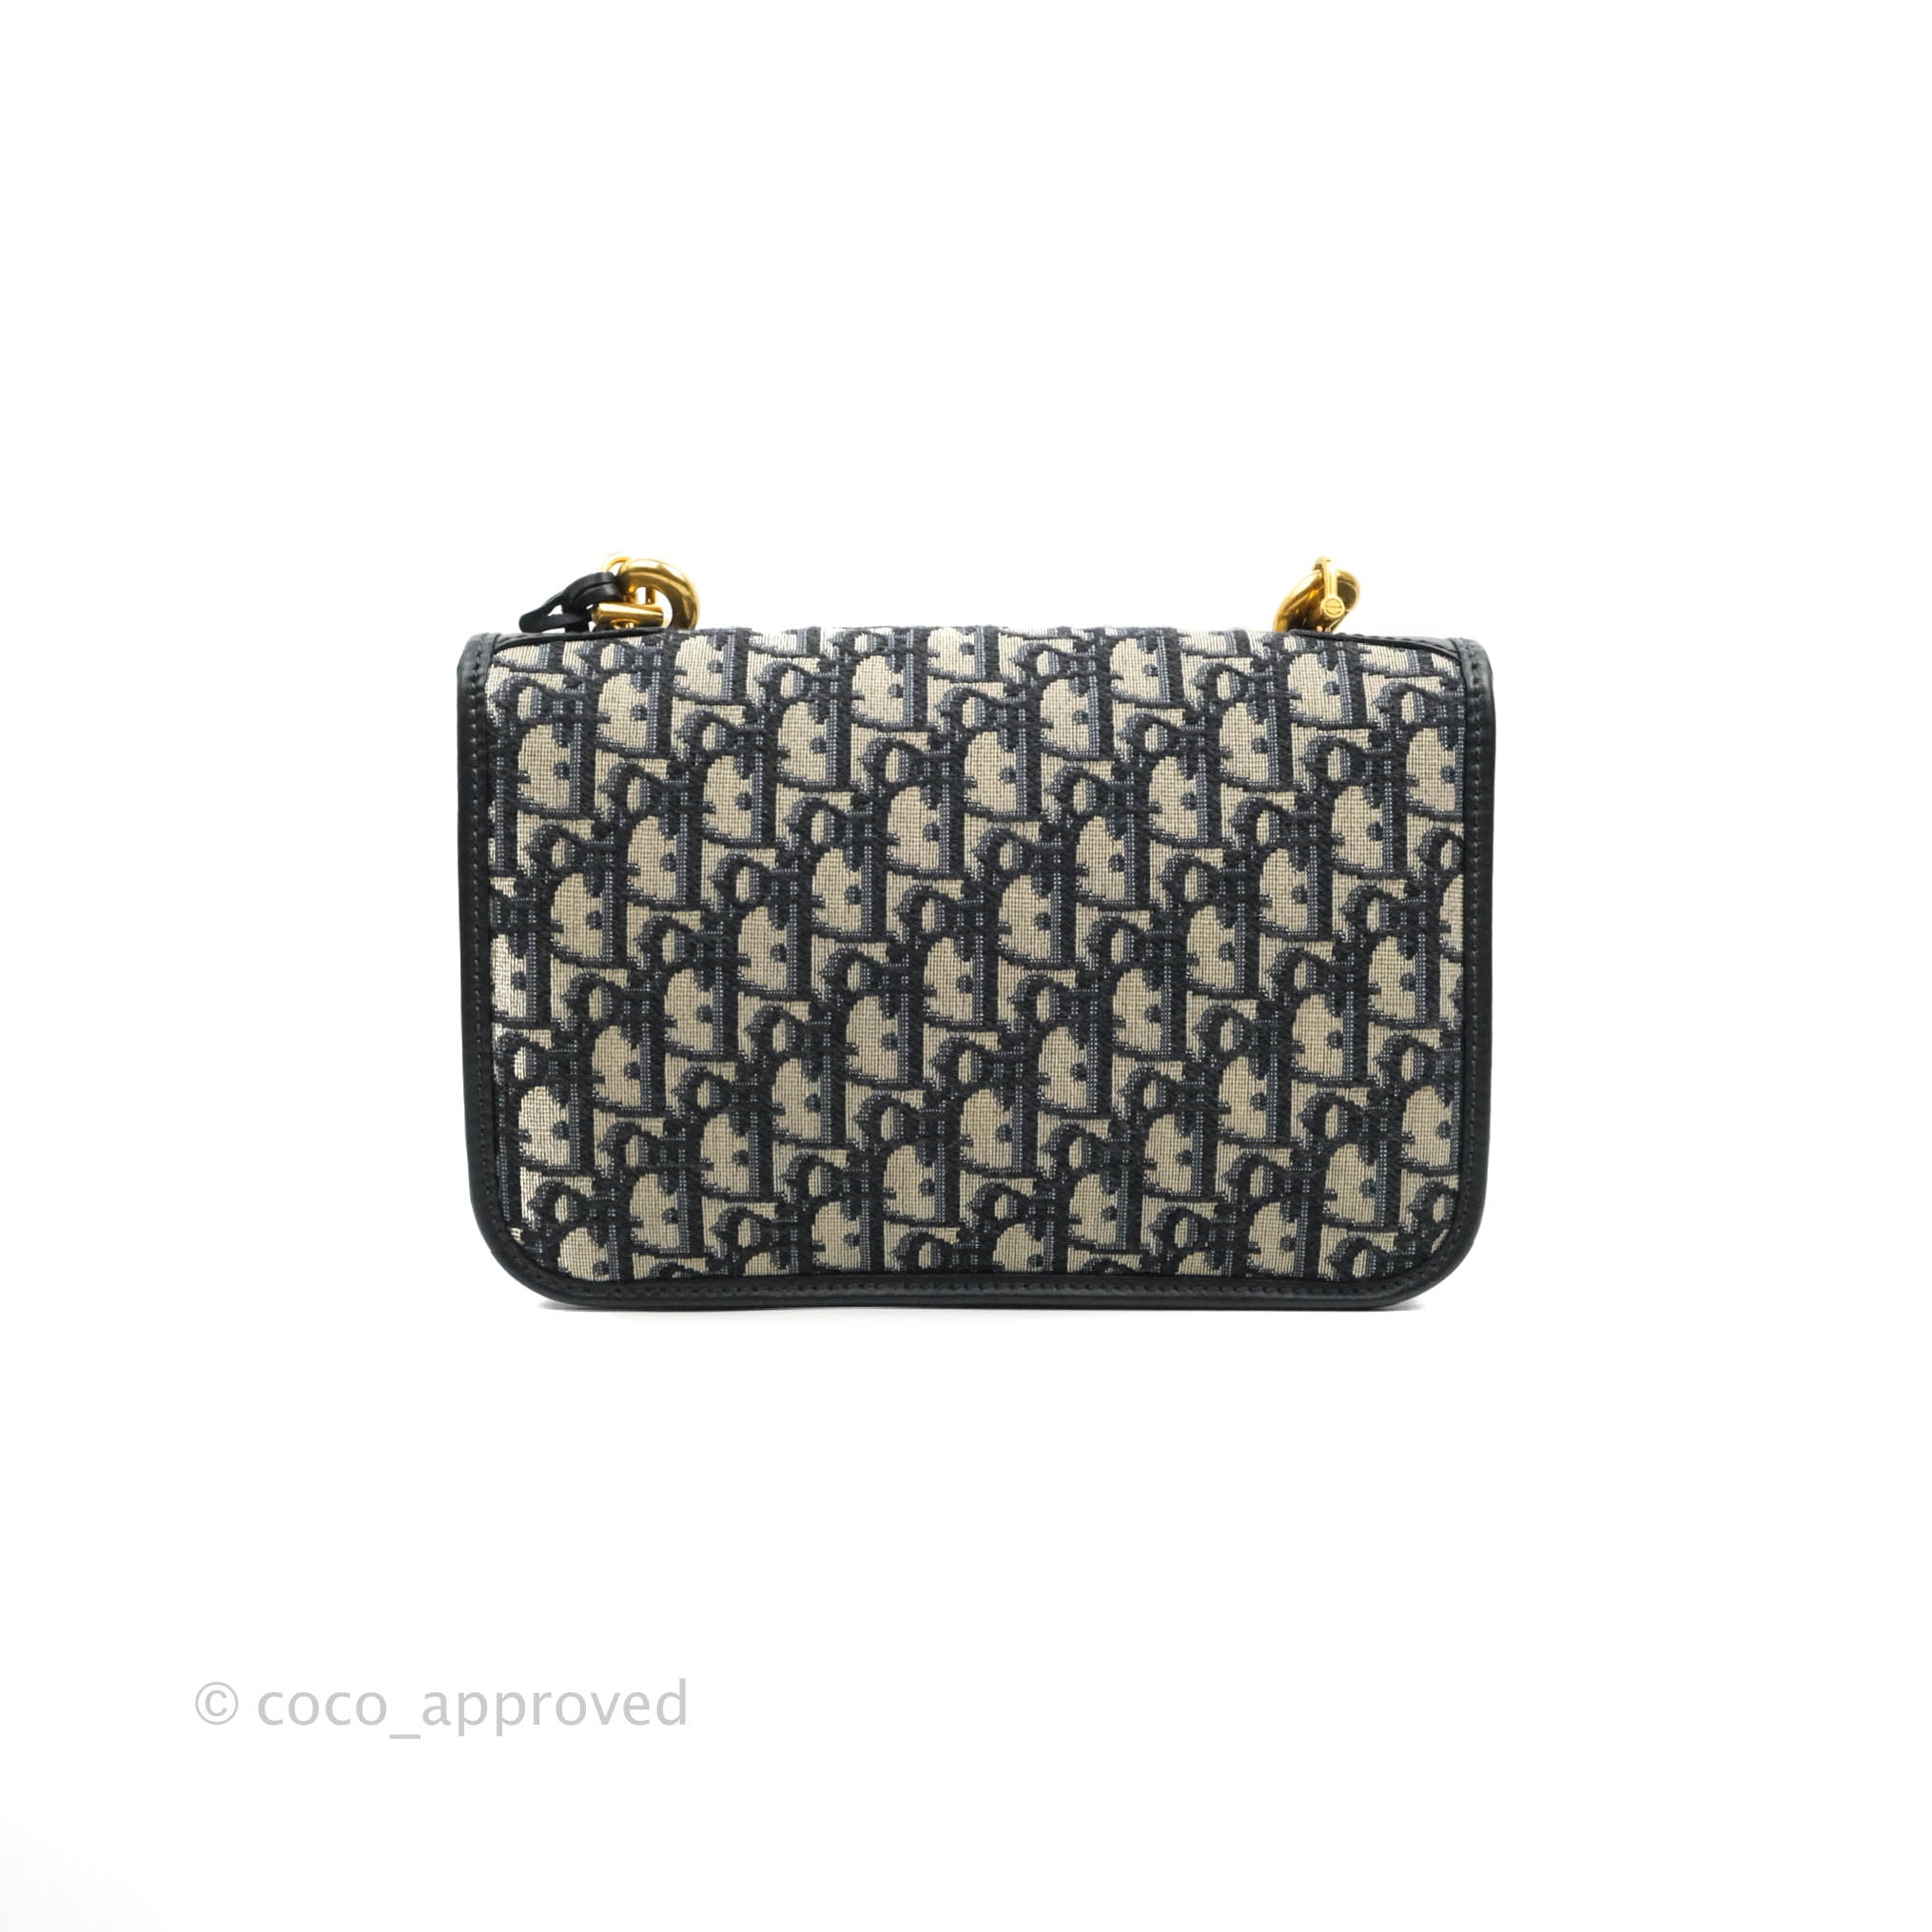 Christian Dior Baby Pink Calfskin Dior Addict Wallet on Chain Gold Hardware (Very Good), Womens Handbag